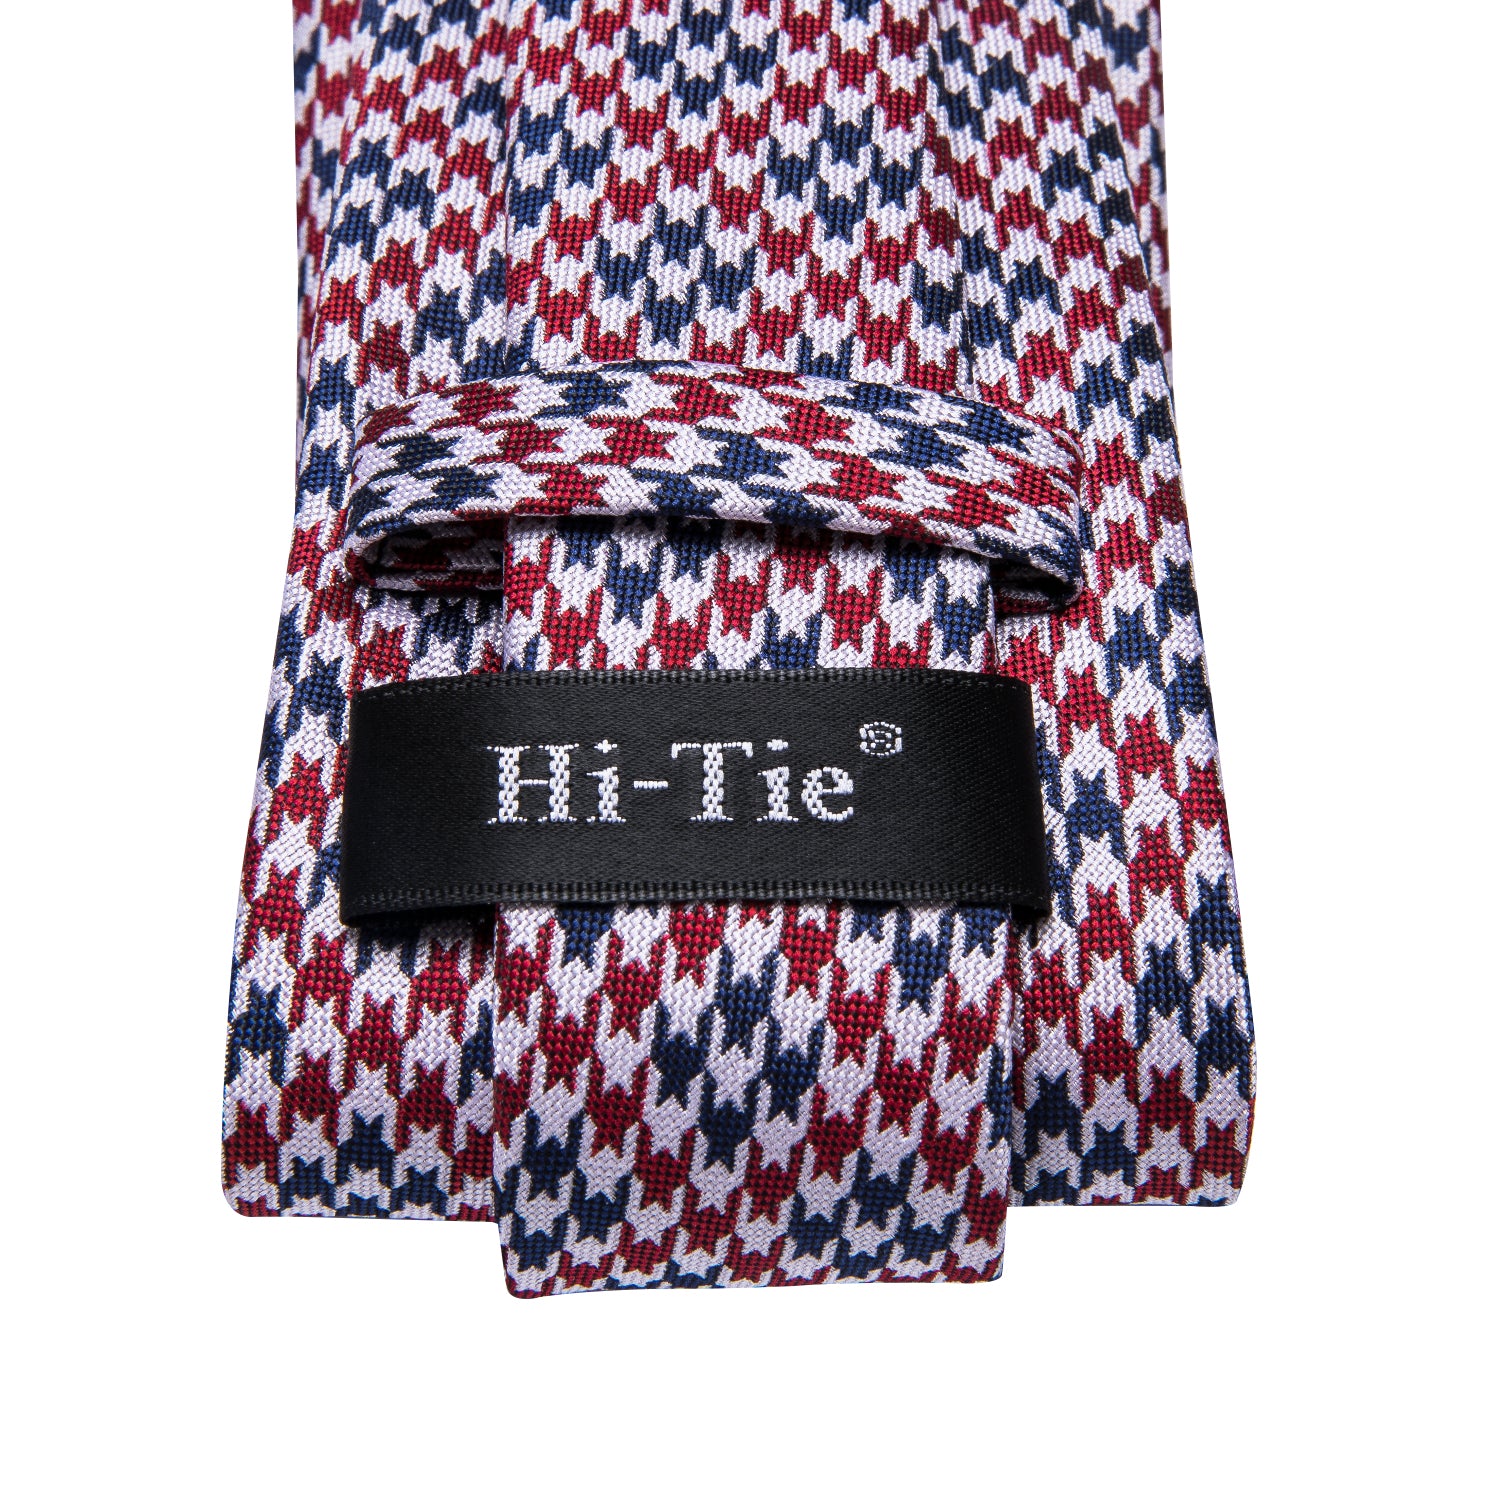 Red Blue White Houndstooth Tie Pocket Square Cufflinks Set